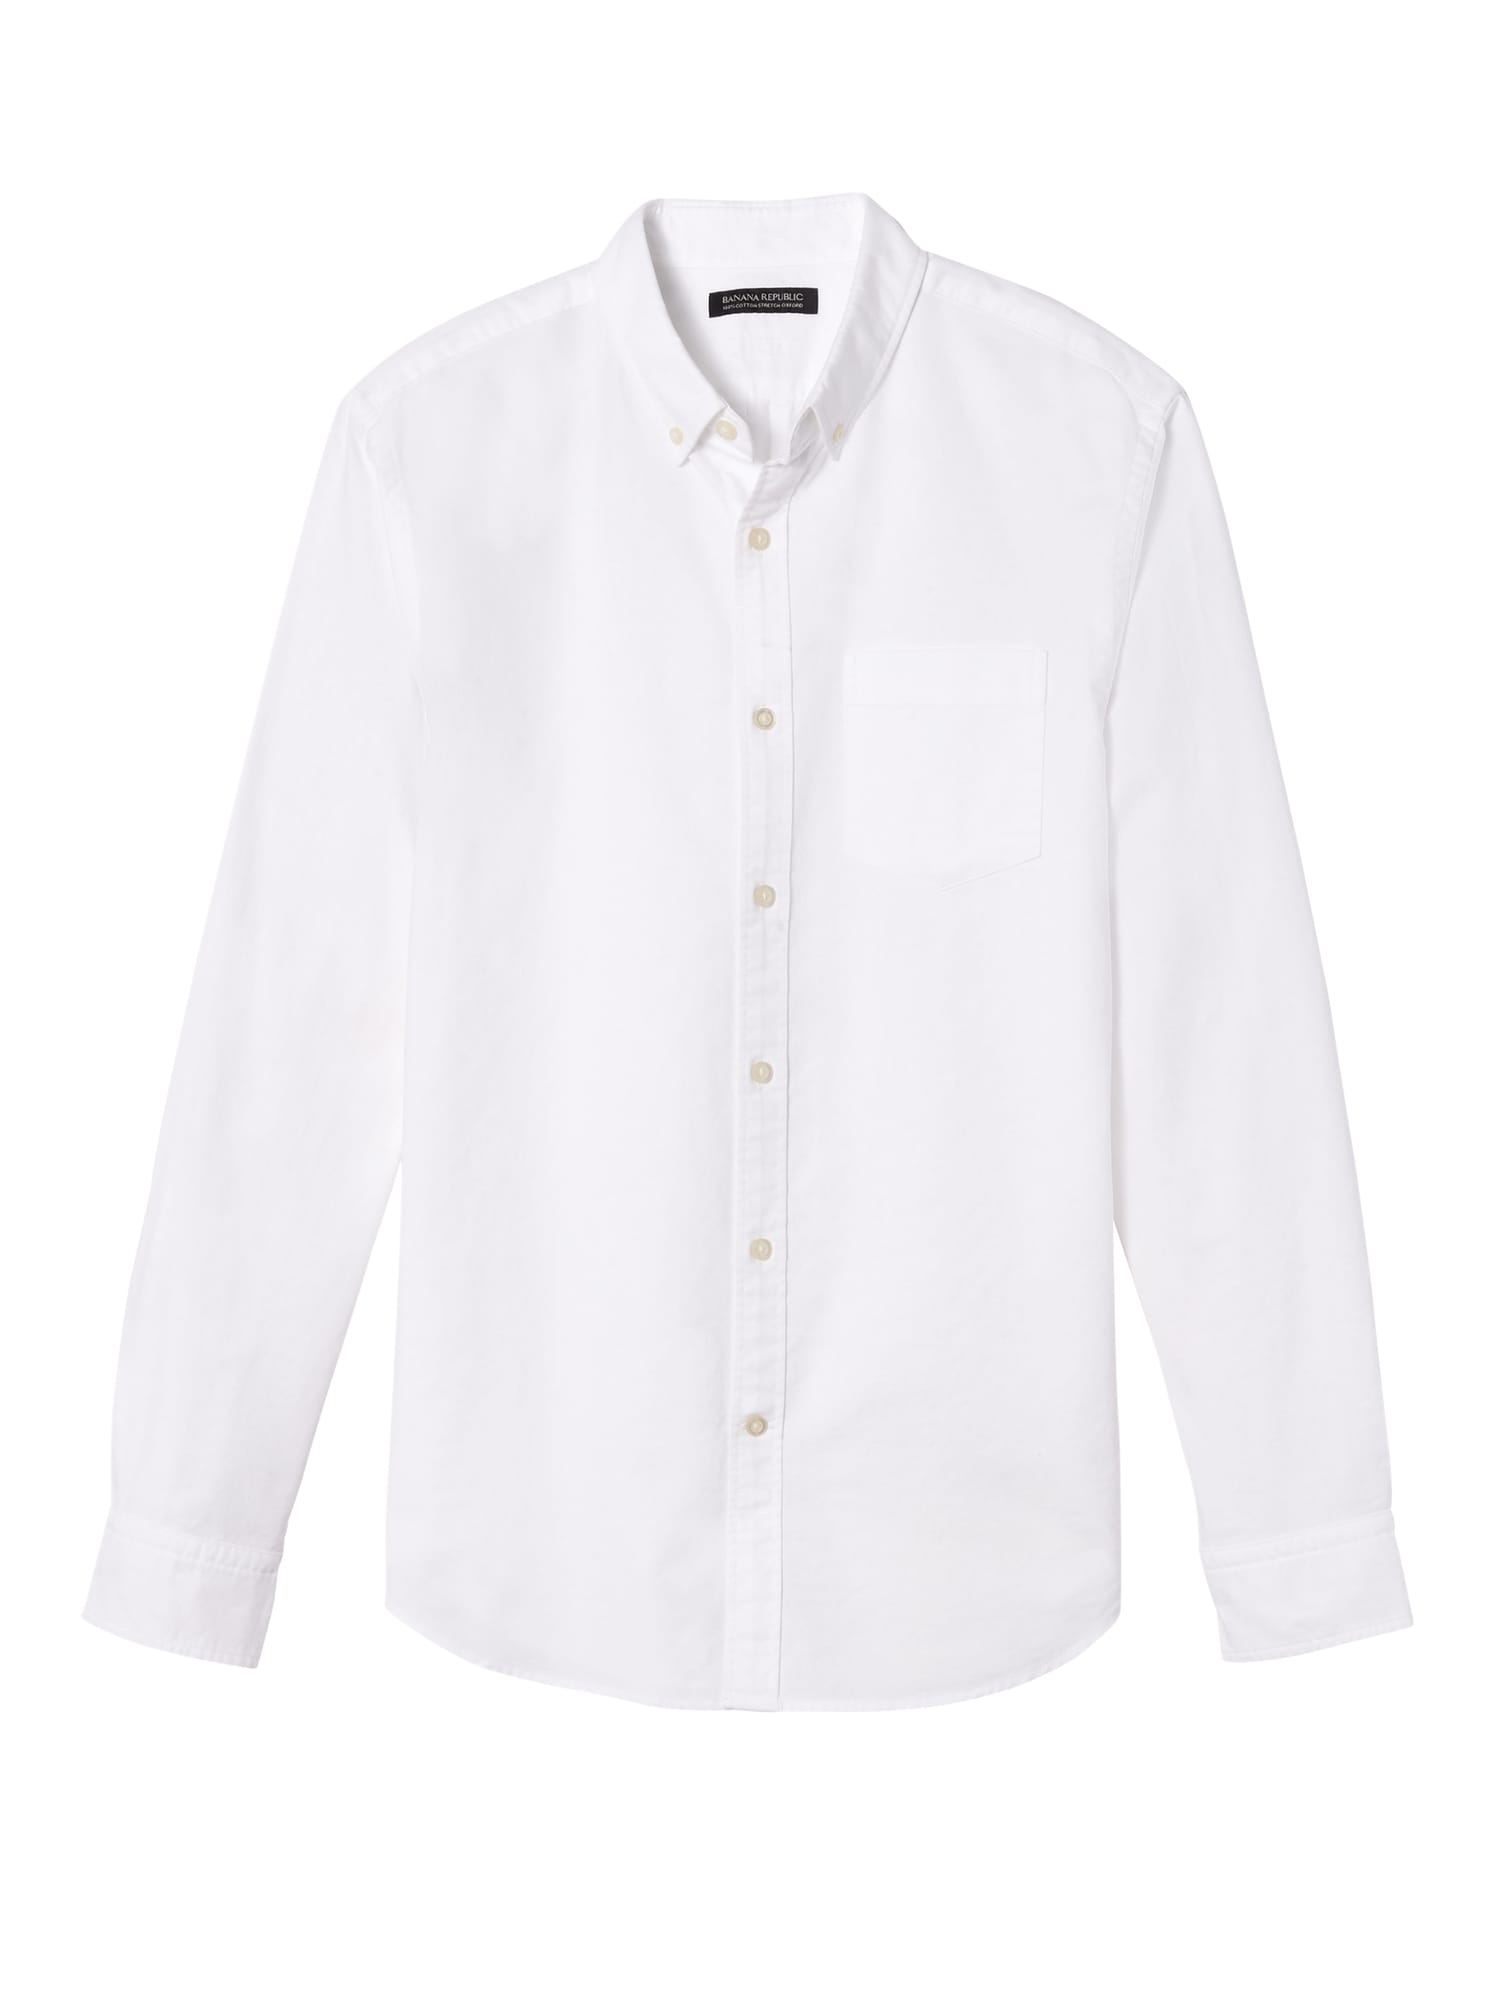 Standard-Fit Cotton Oxford Shirt  